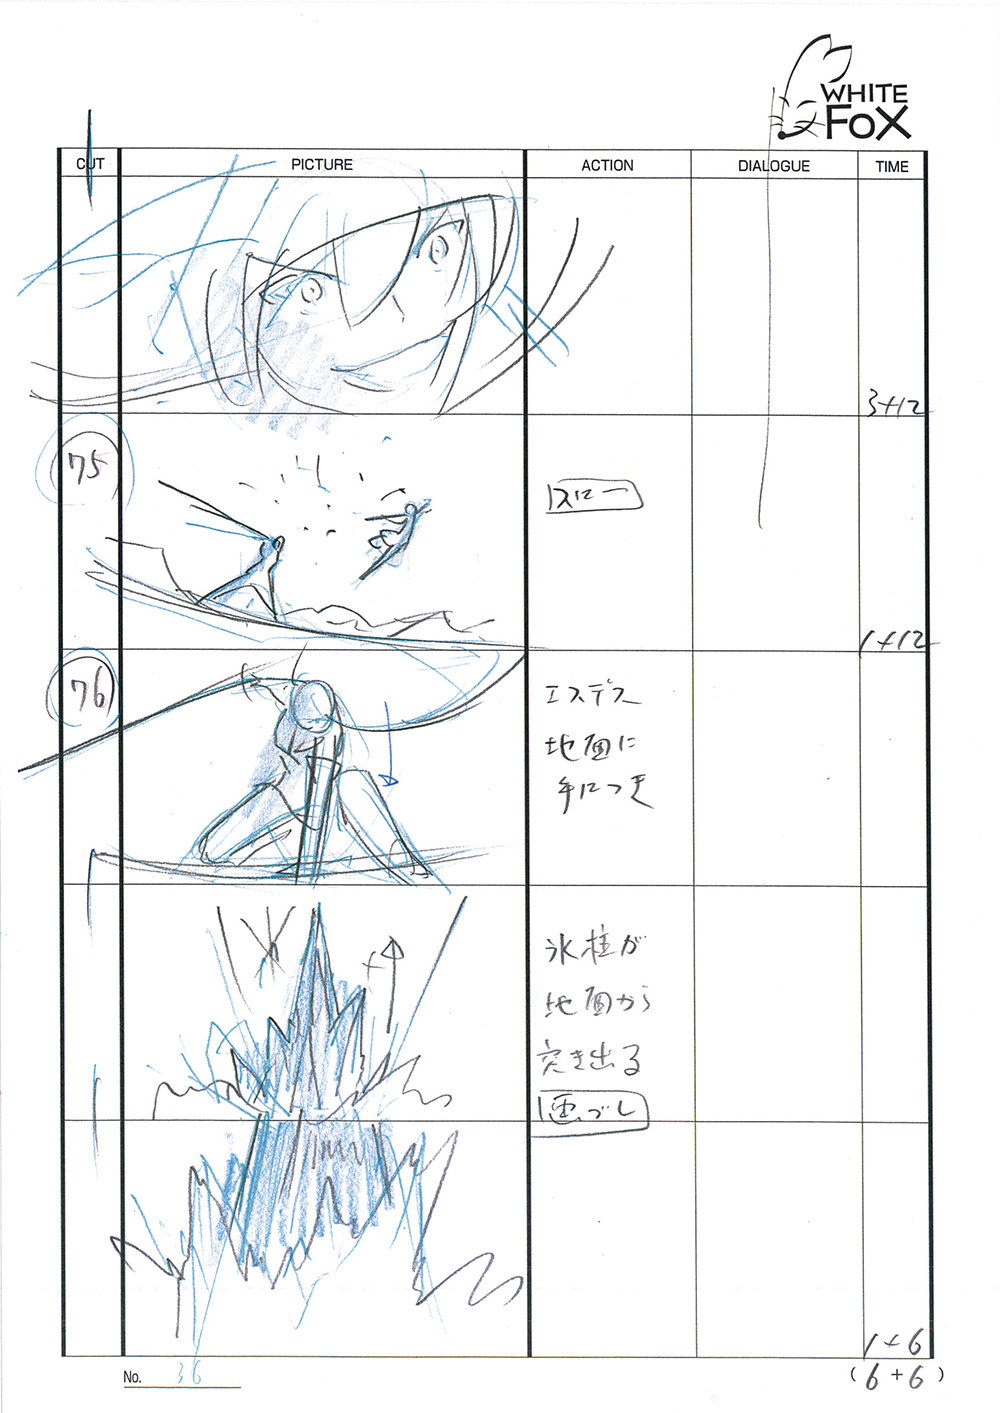 Akame ga Kill Episode 24 Storyboard Leak 038